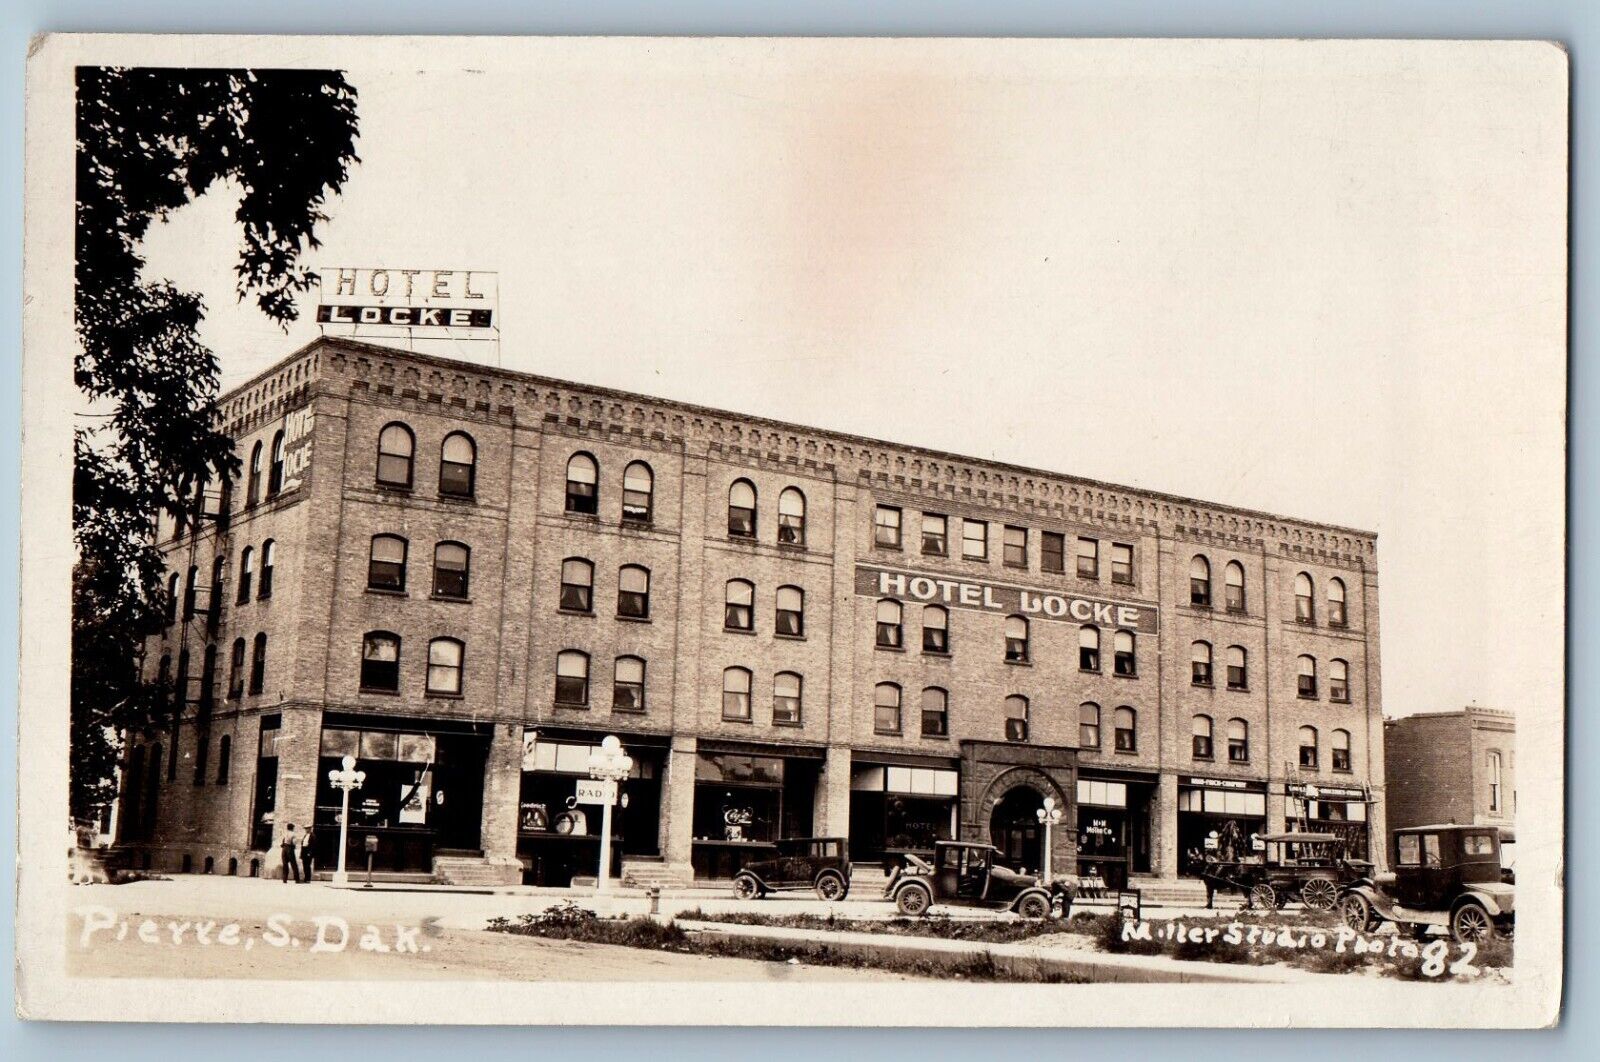 1927 Hotel Locke Miller Studio Pierre South Dakota SD RPPC Photo Postcard